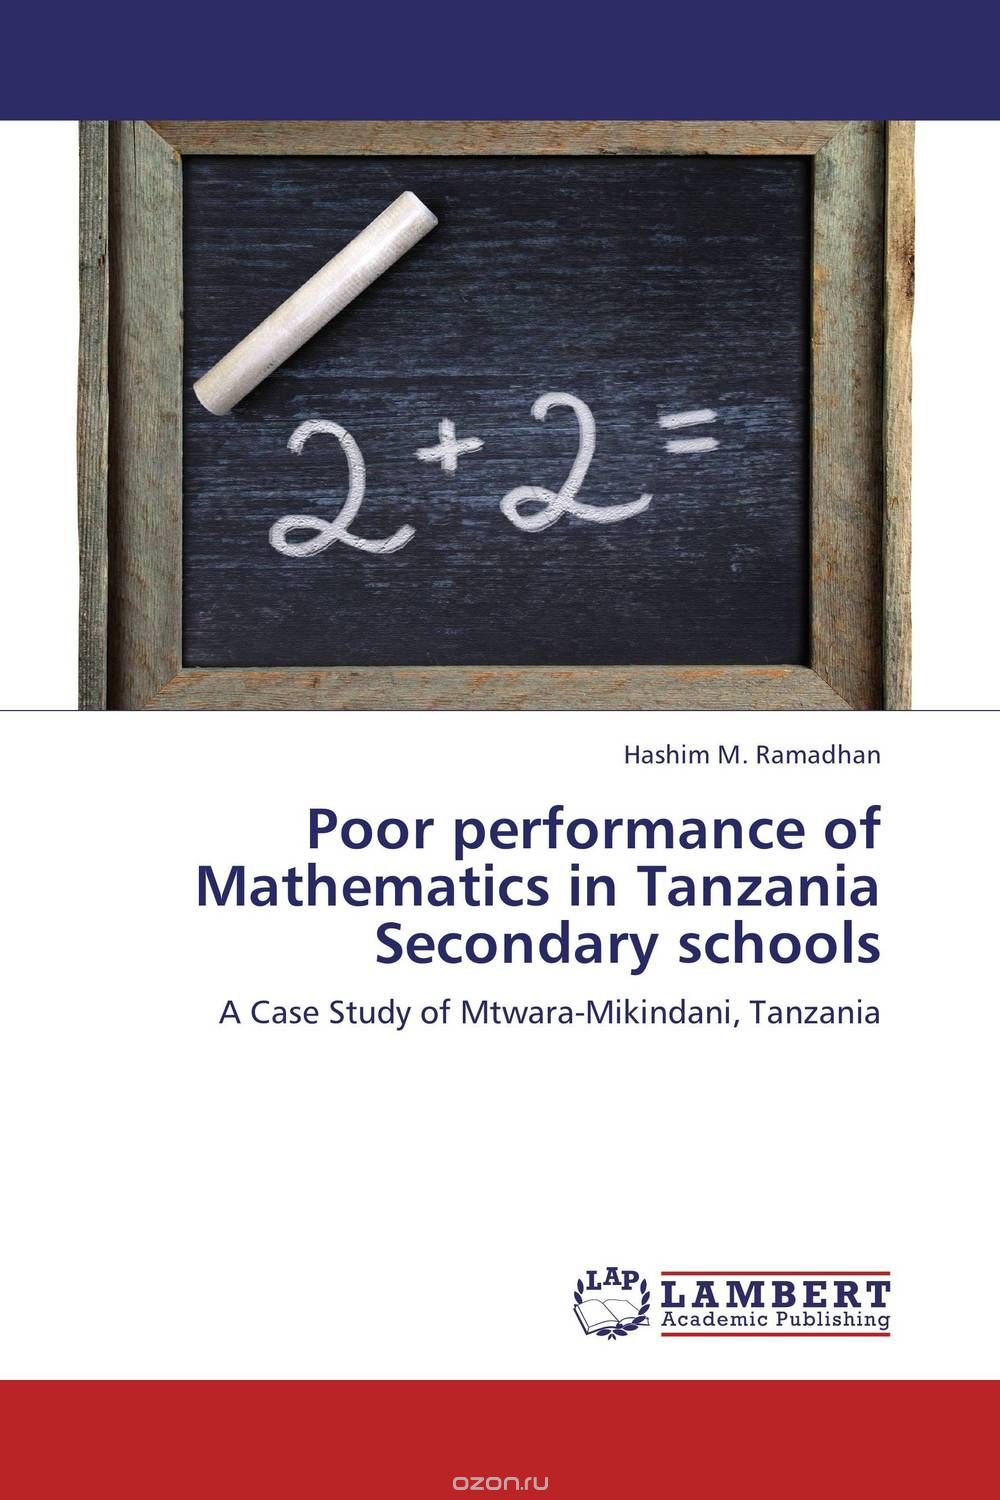 Скачать книгу "Poor performance of Mathematics in Tanzania Secondary schools"